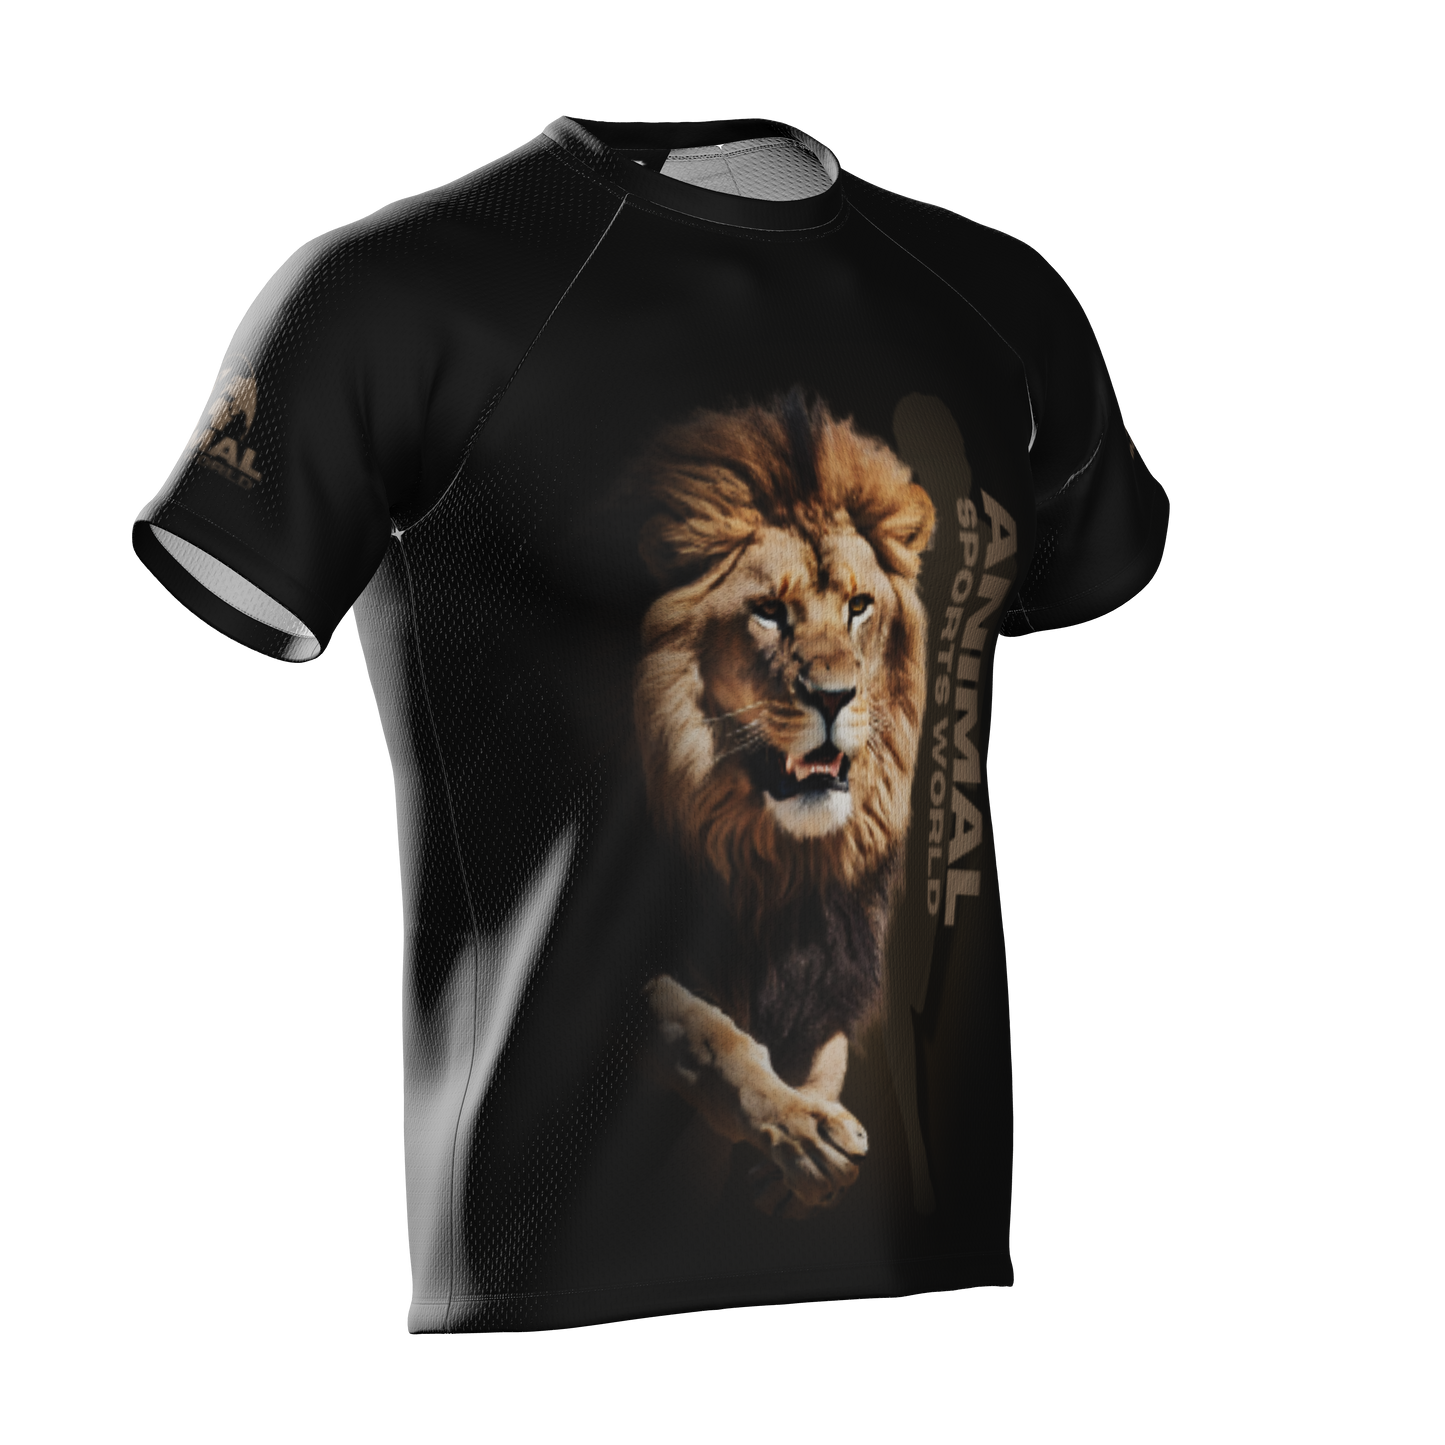 Camiseta técnica manga corta unisex - LION